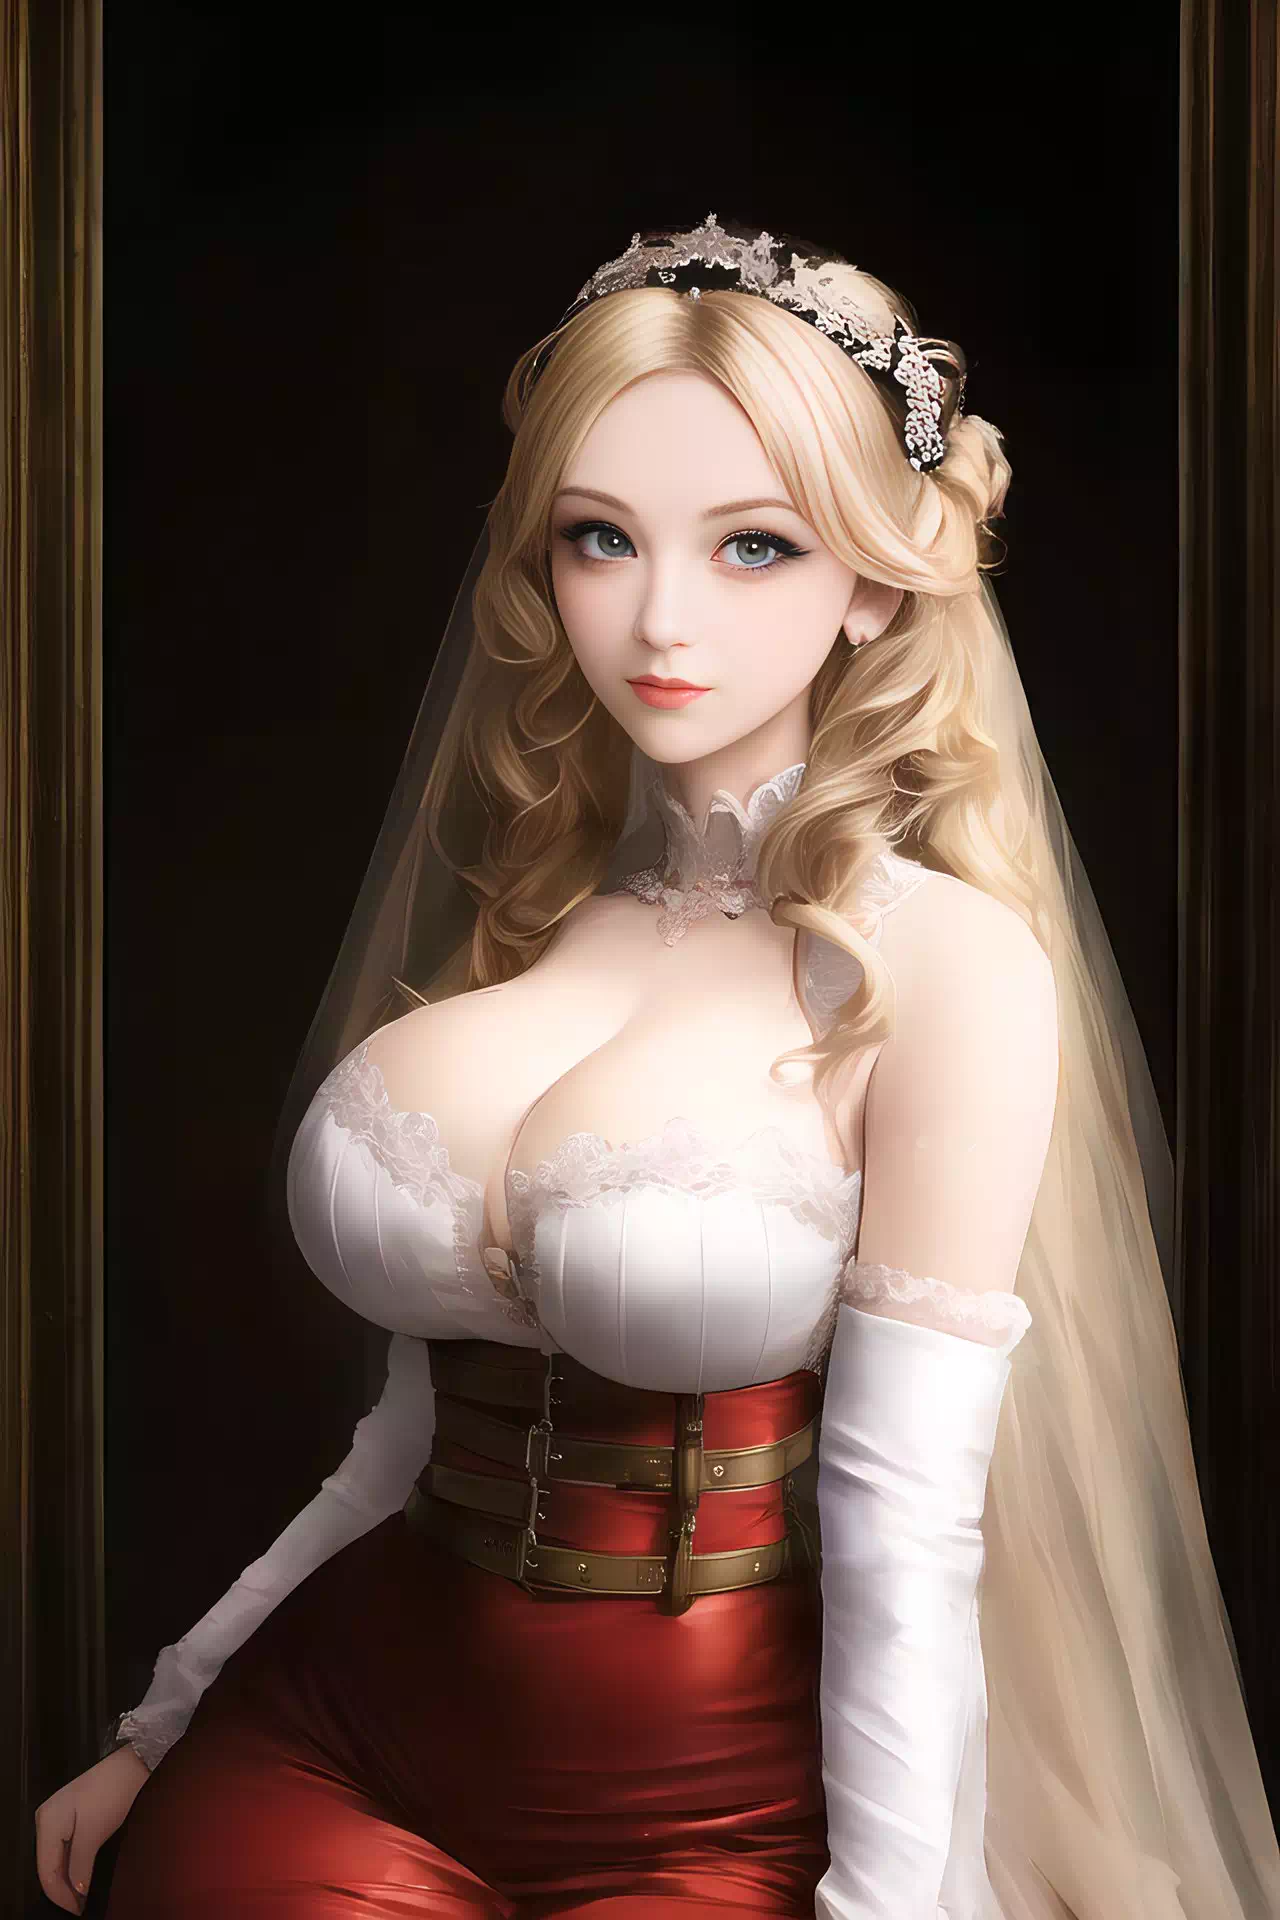 Victorian Princess